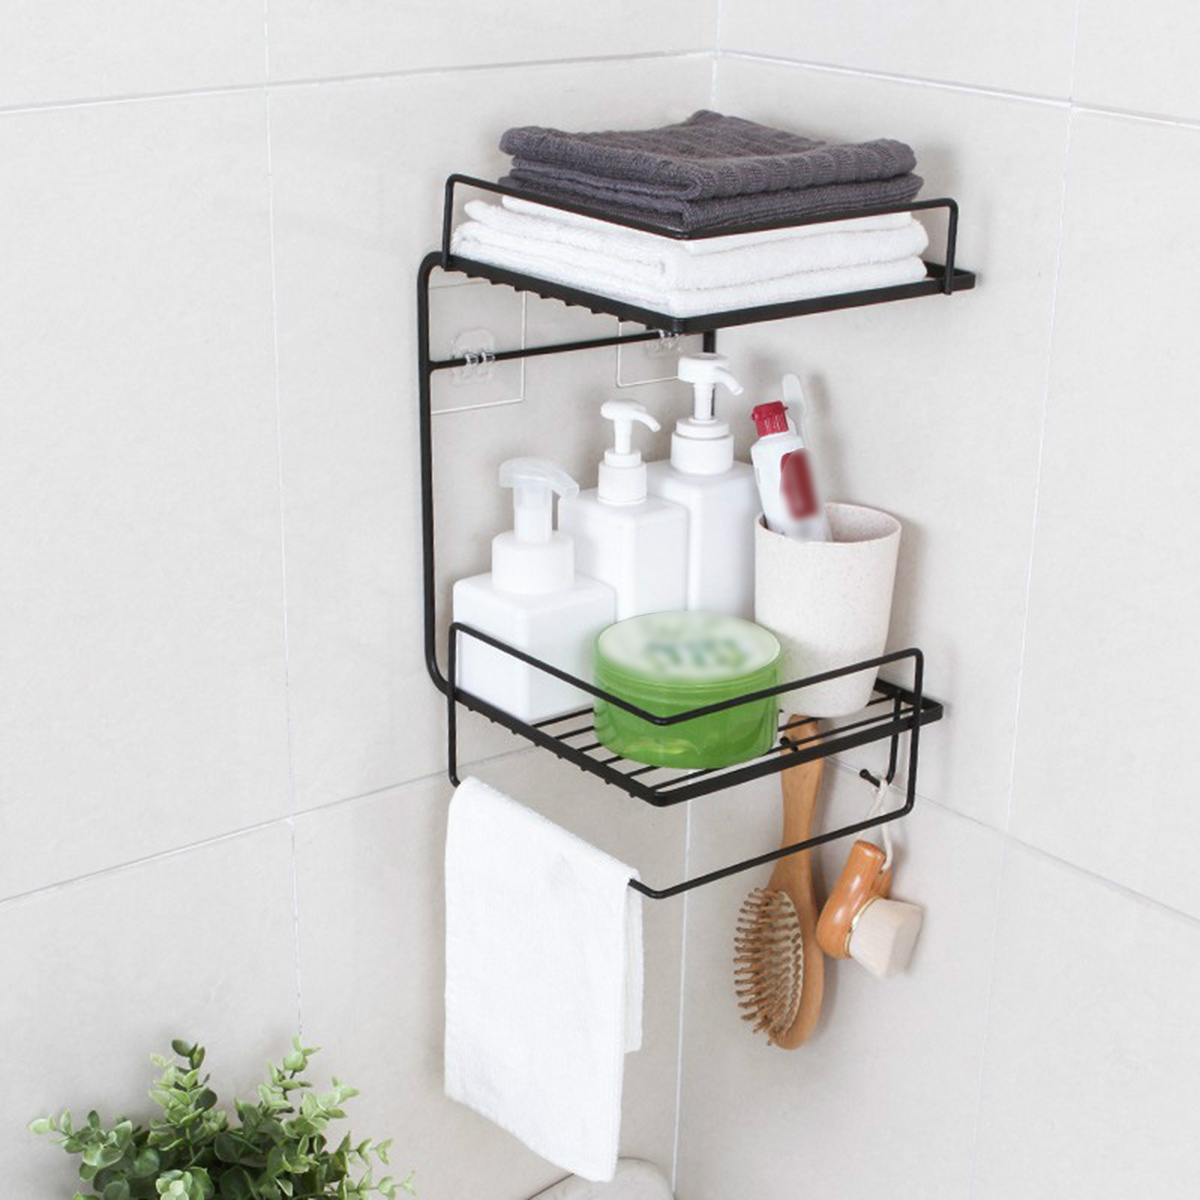 Bathroom-Shelf-Perforation-Free-Wall-Mounted-Kitchen-Shelf-Toilet-Shelf-Wall-Corner-Shelf-Rack-1586125-4